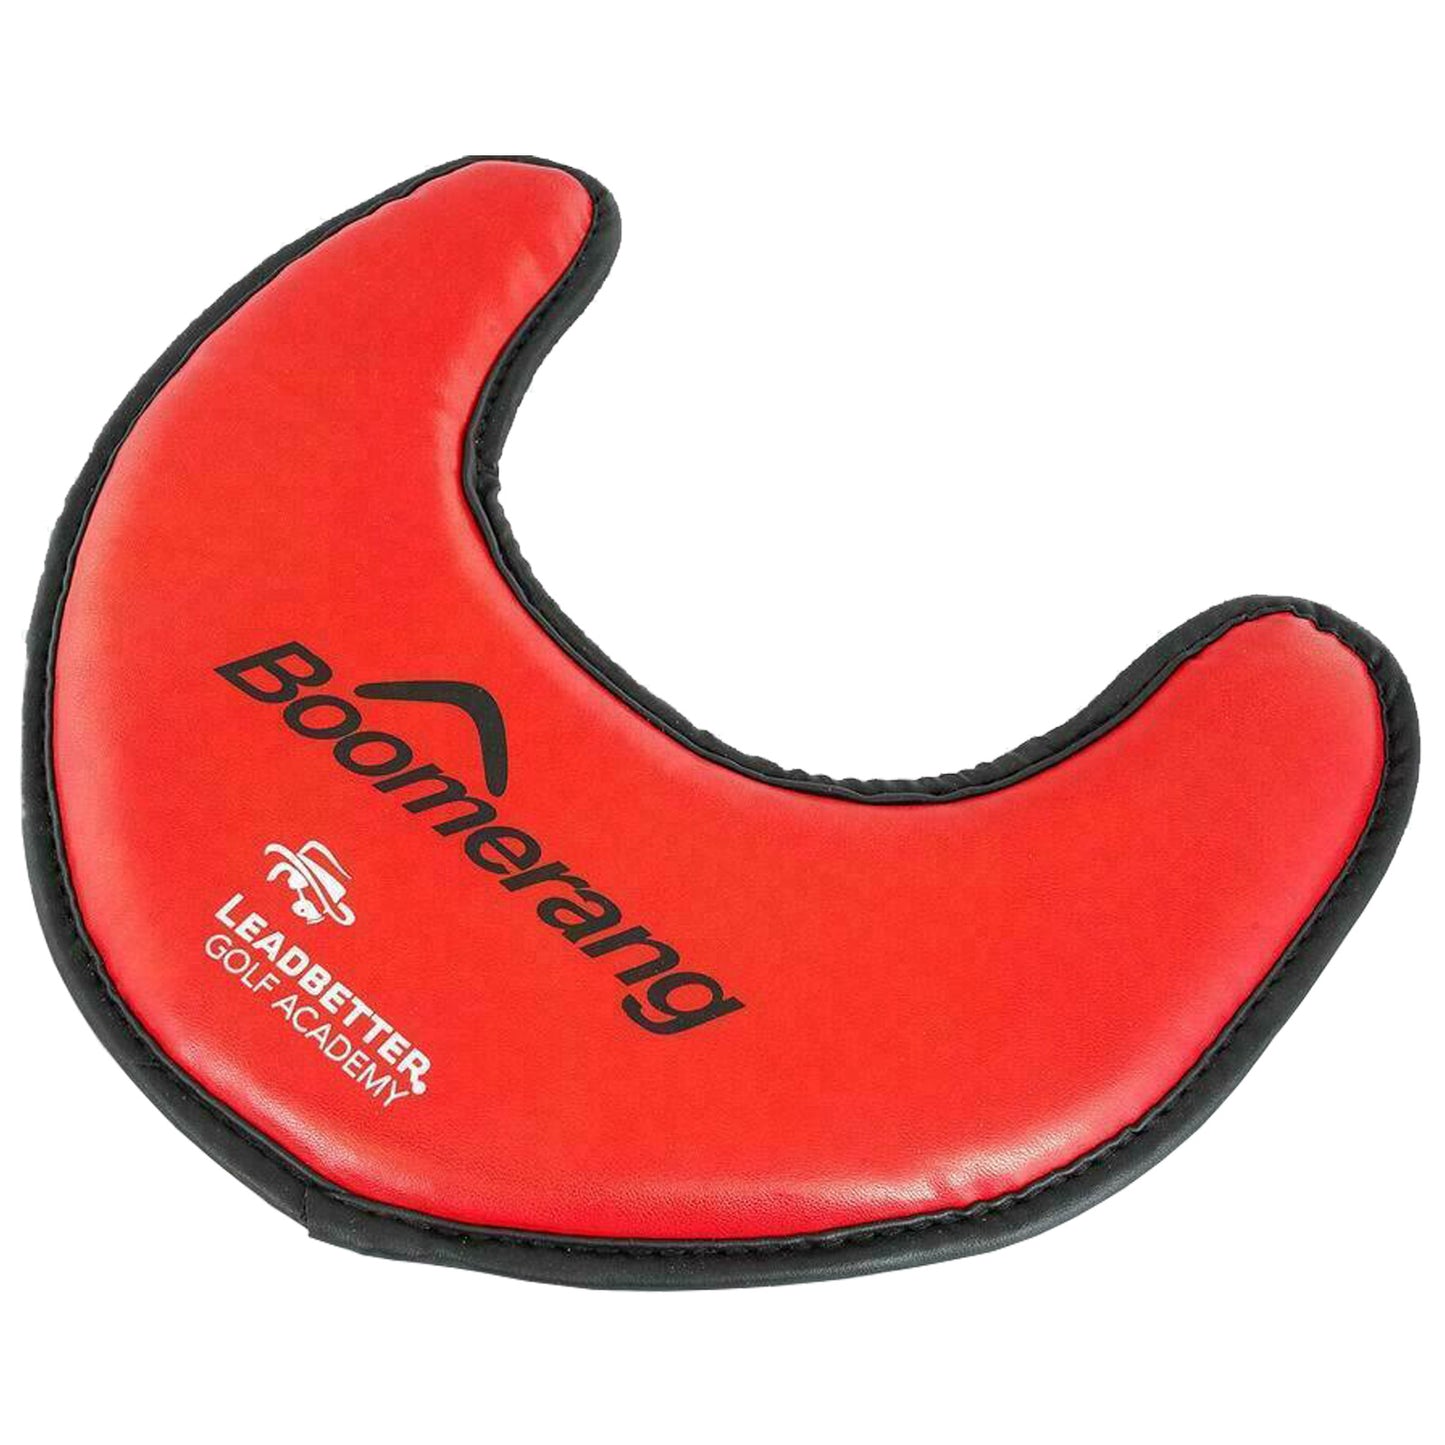 Leadbetter Boomerang